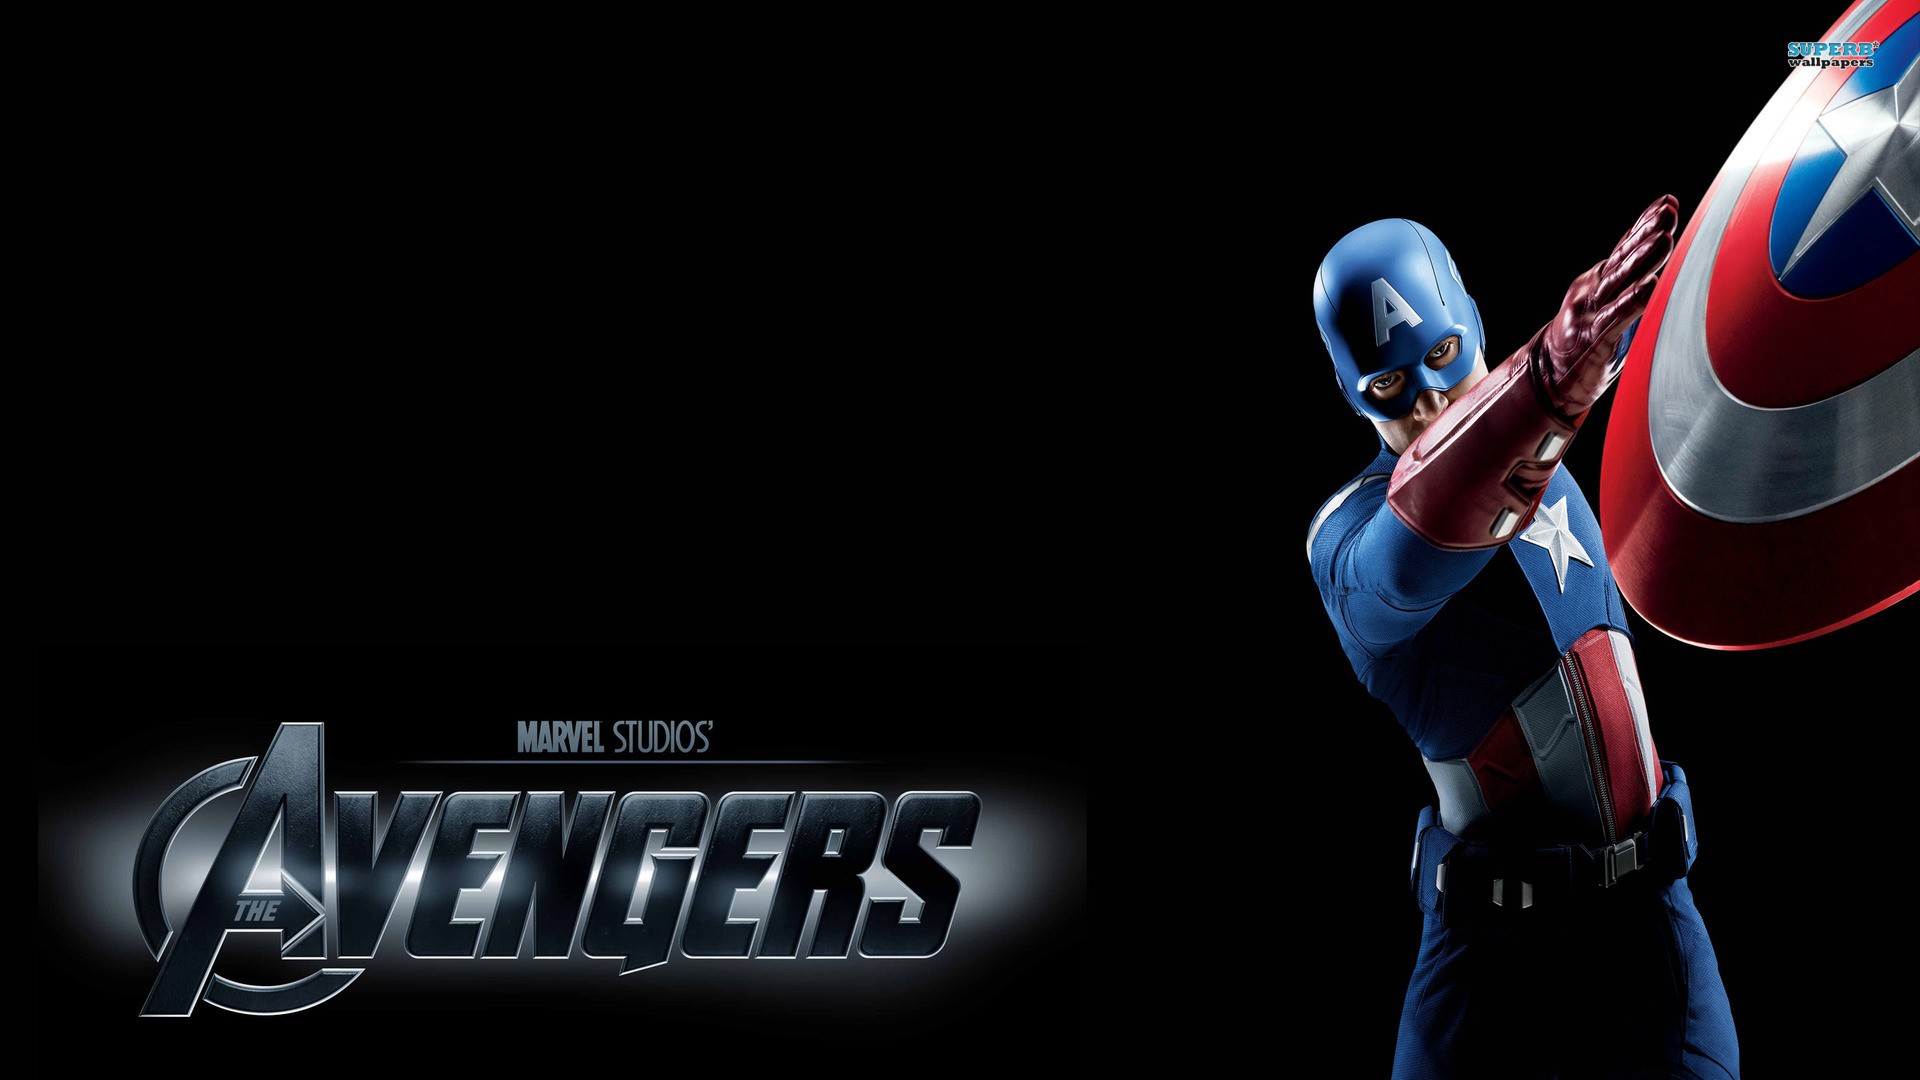 General 1920x1080 The Avengers Captain America Chris Evans Steve Rogers Marvel Cinematic Universe superhero shield movies simple background black background